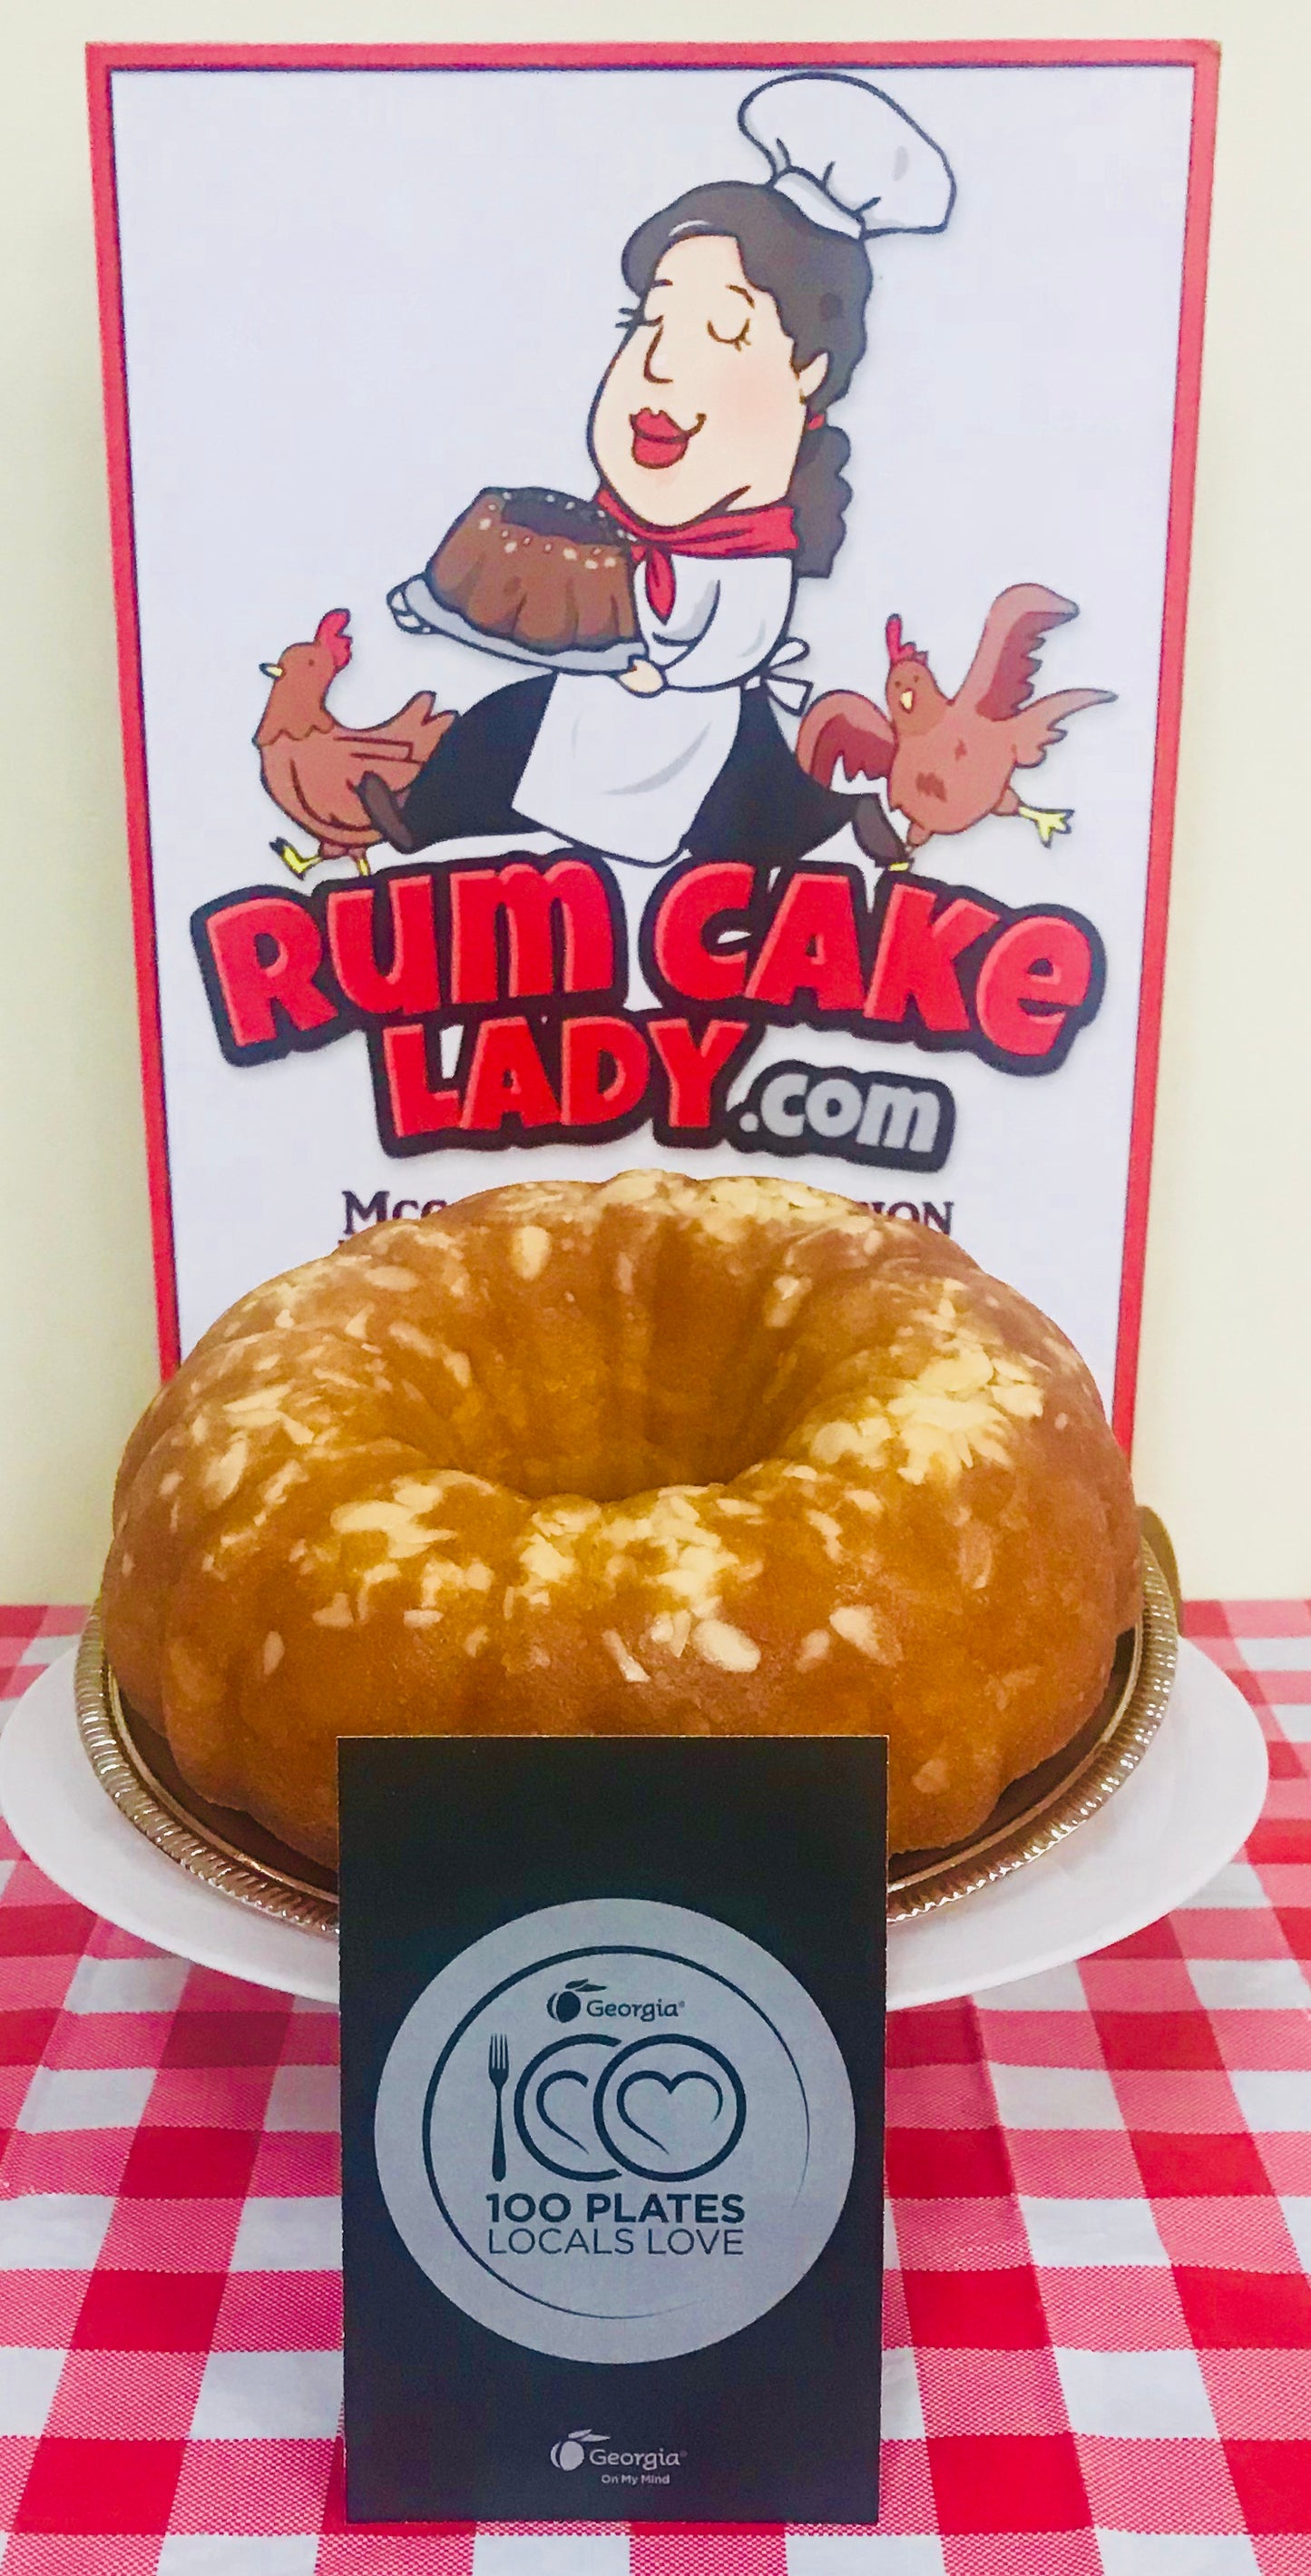 A. Original Golden Bundt Cake, Winner of Georgia's "100 Plates Locals Love"